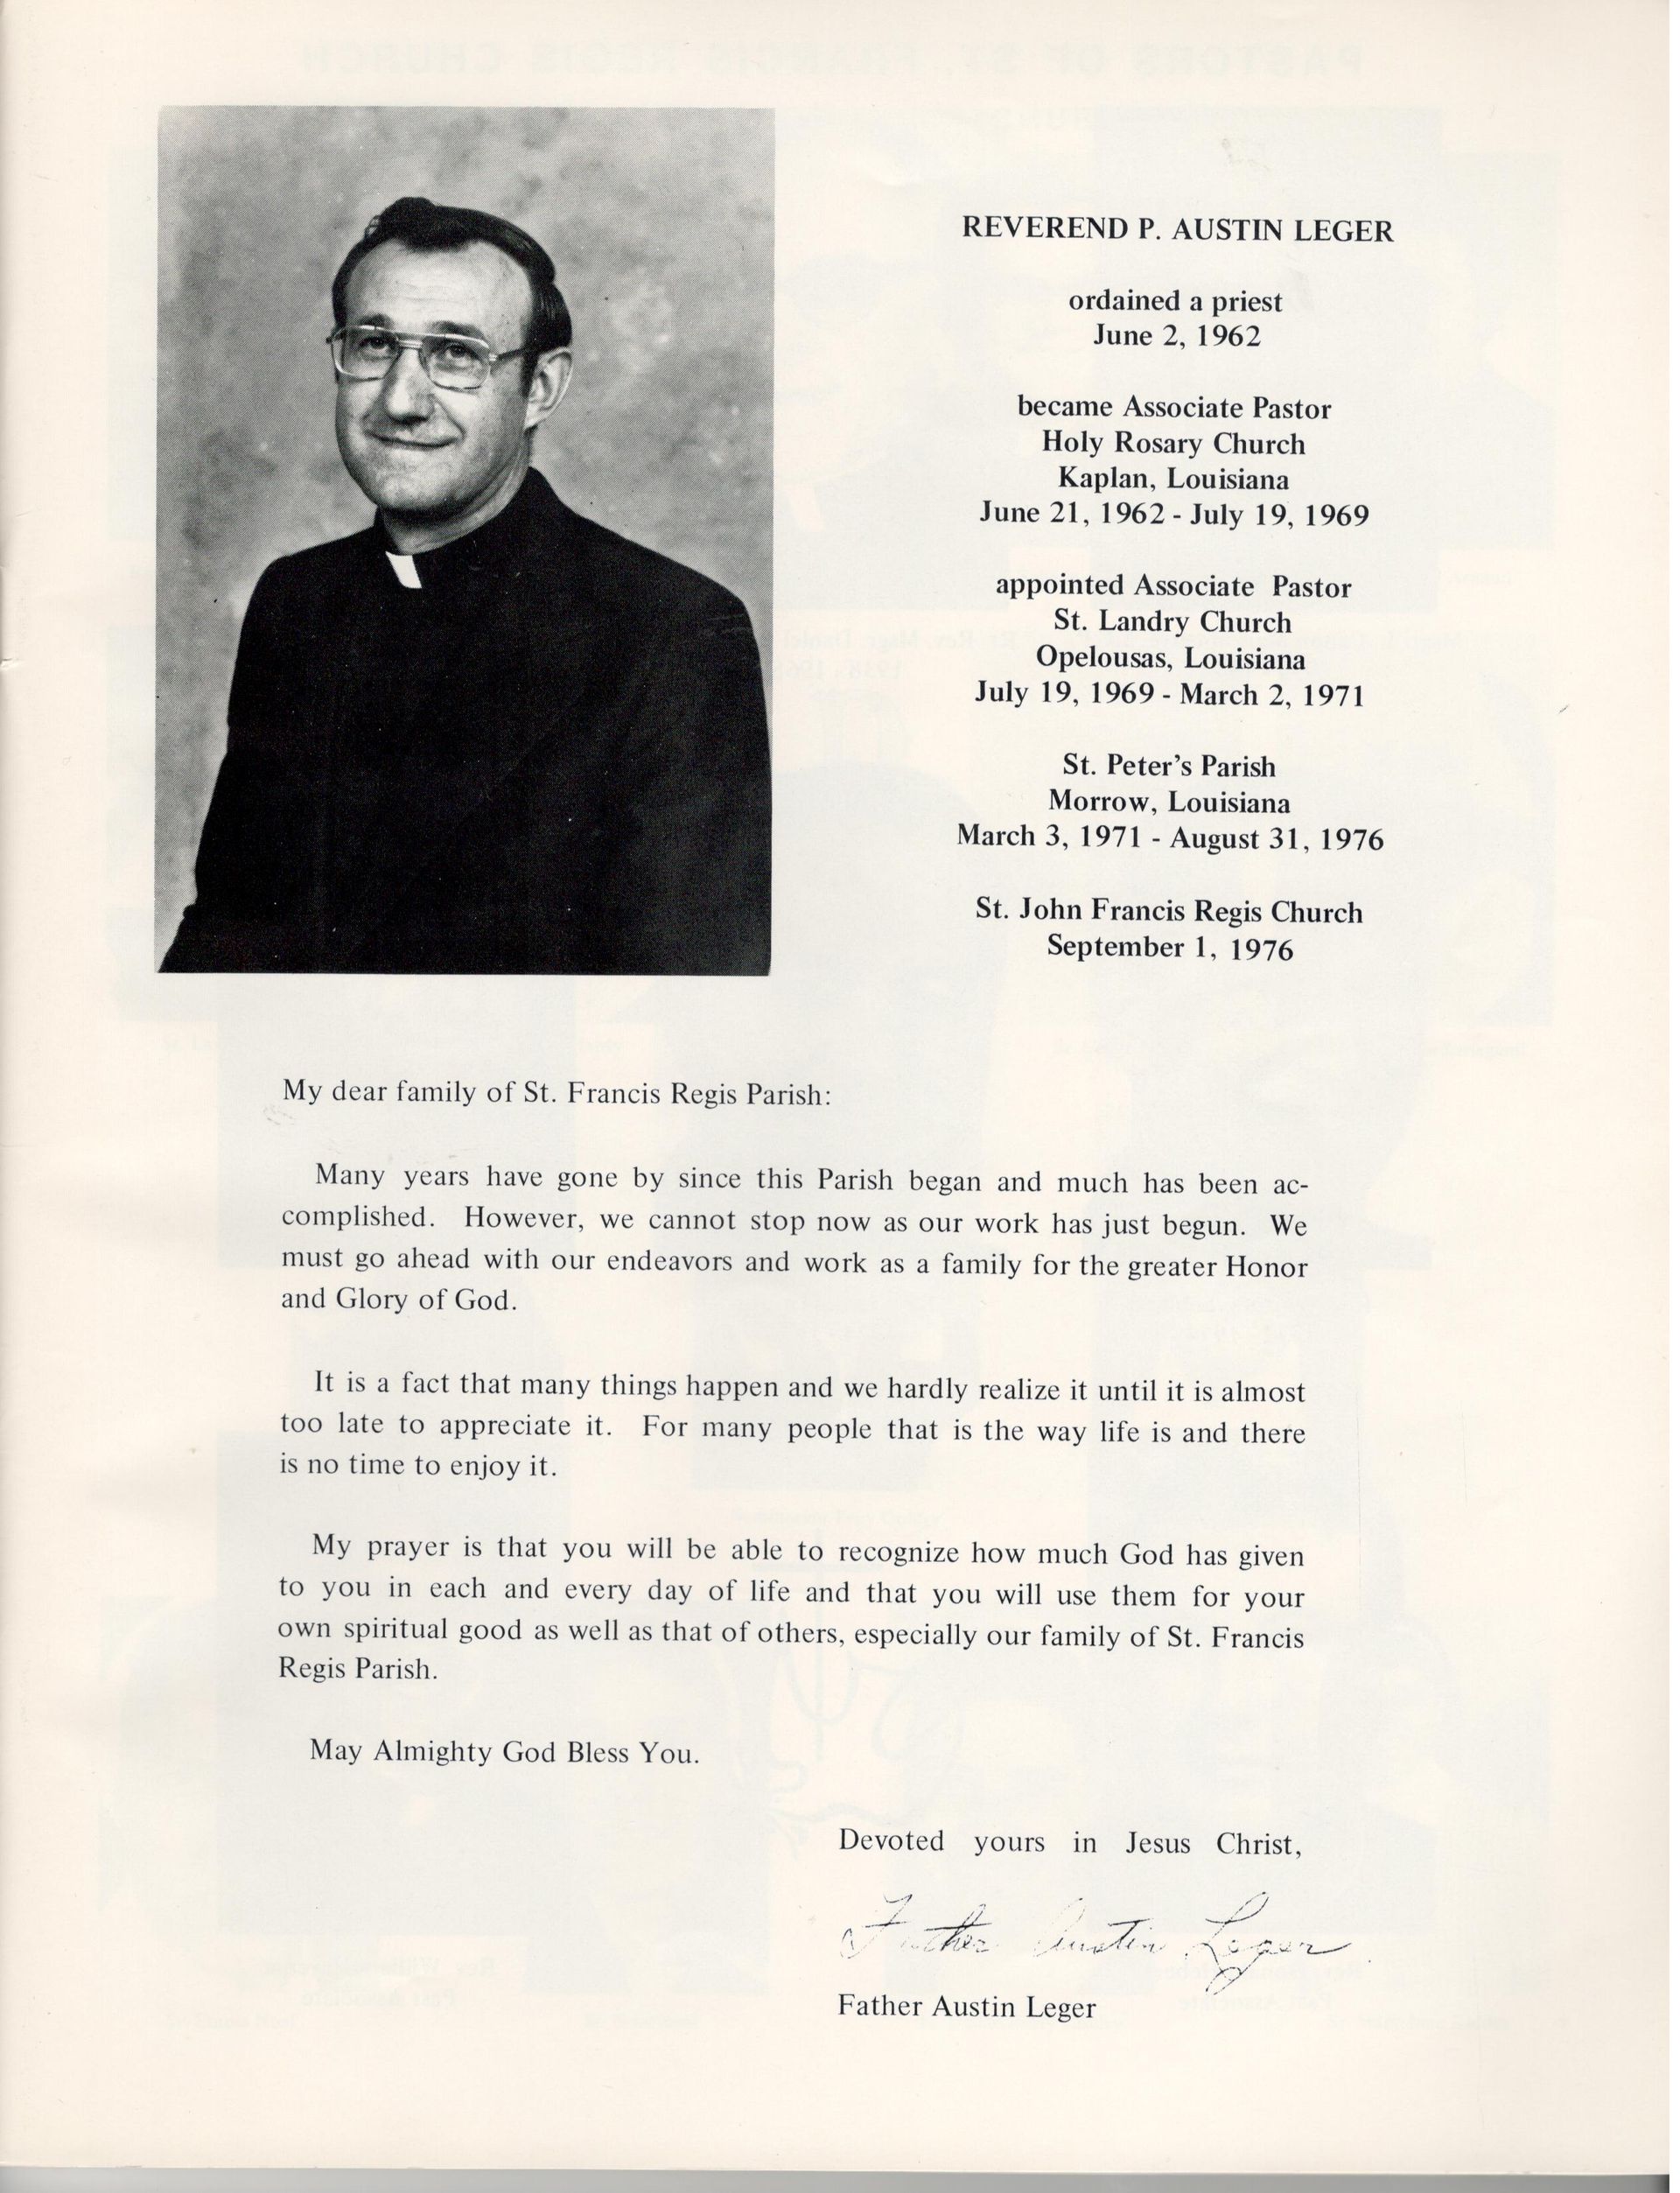 From the 1978 St. John Francis Regis Church Directory